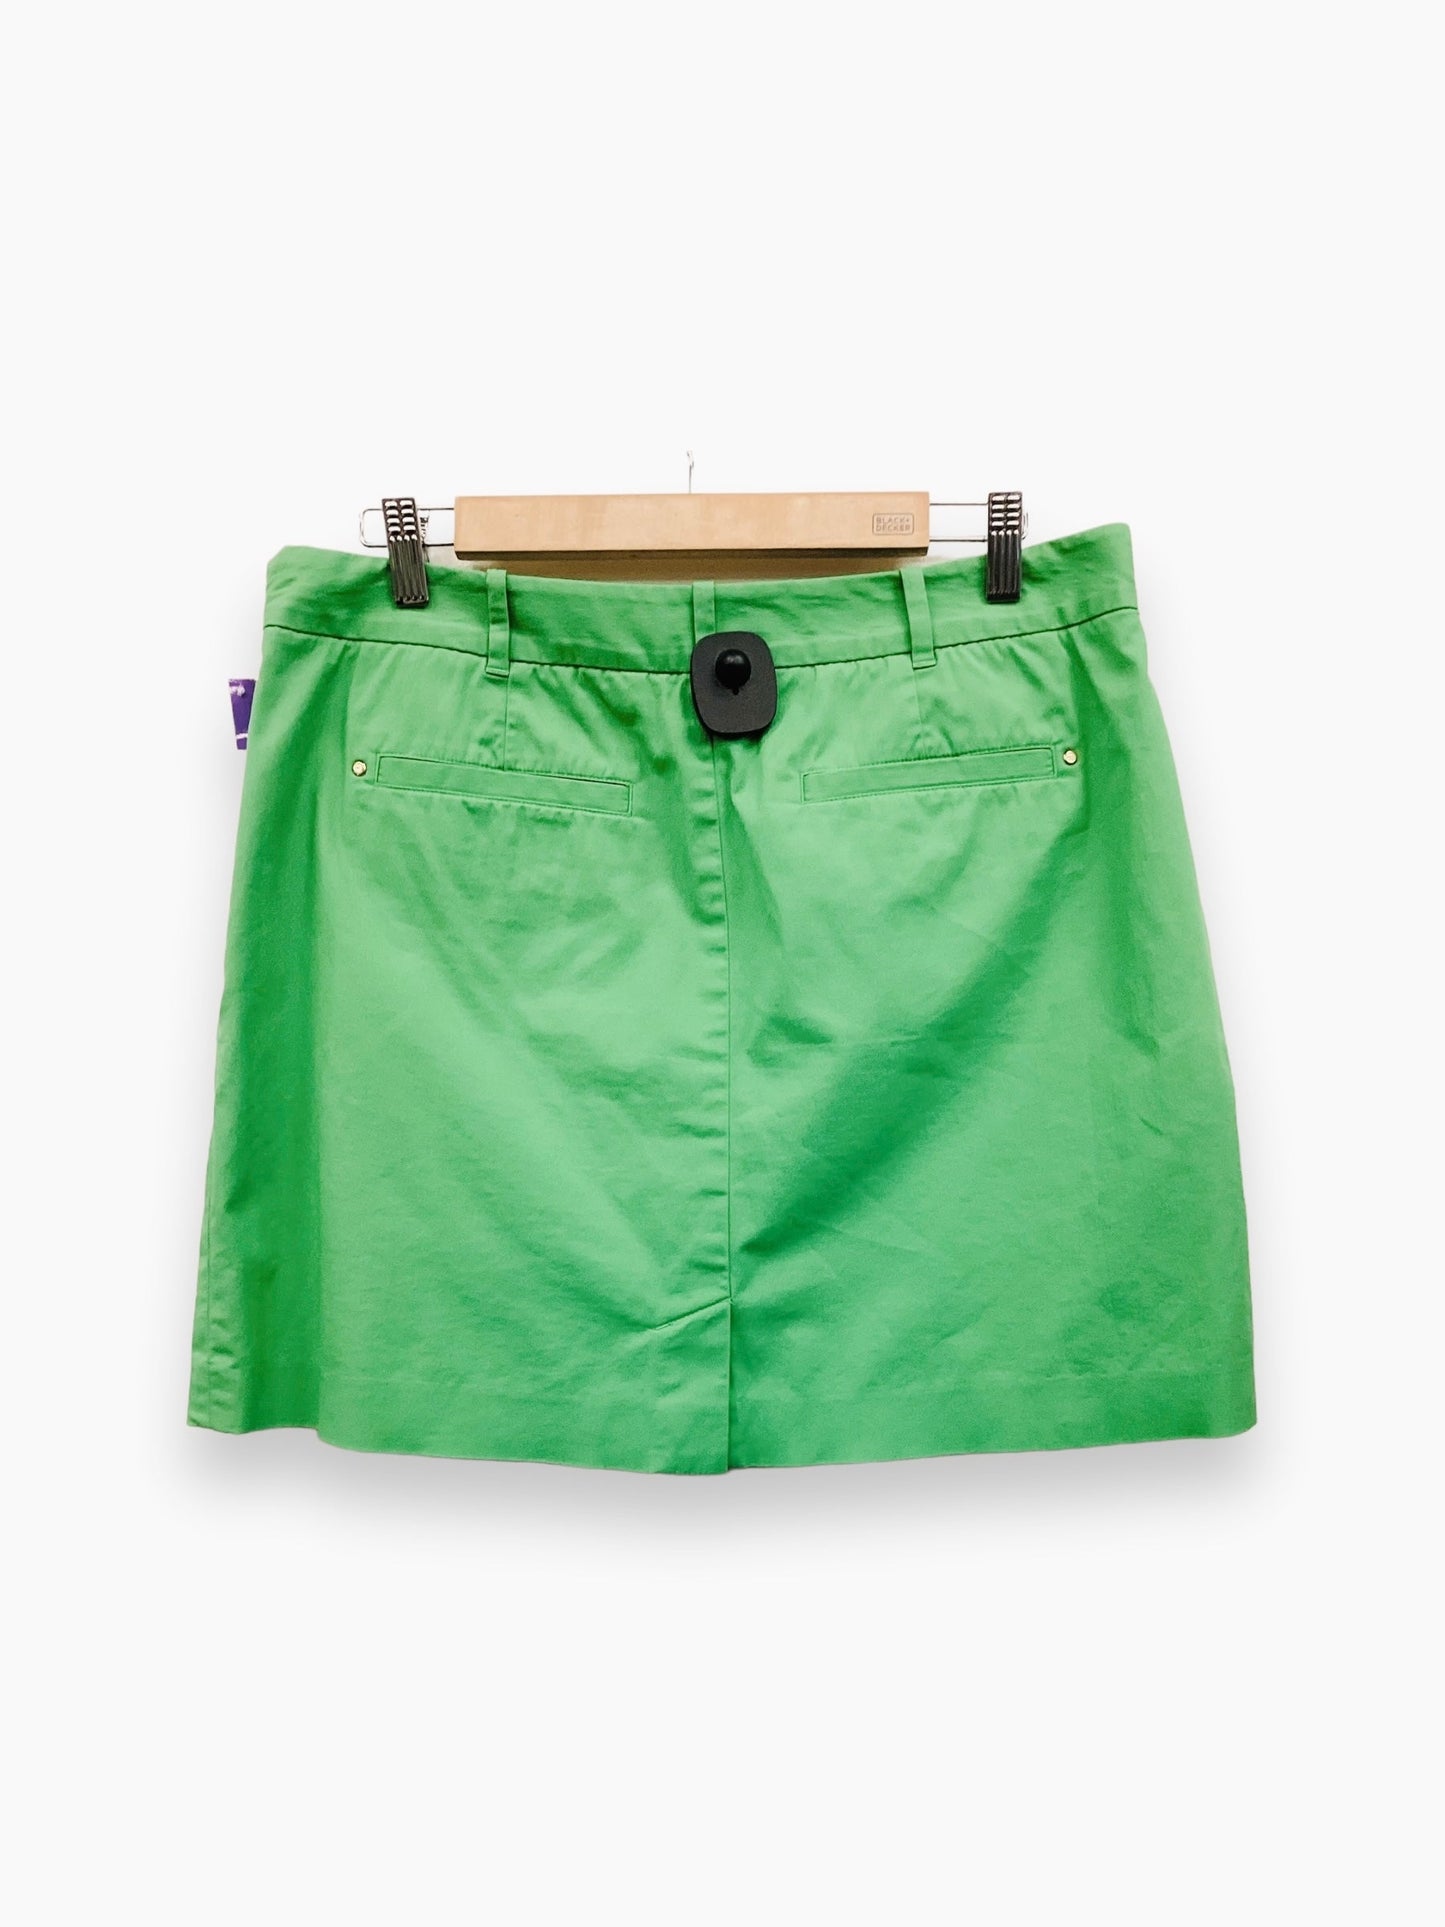 Green Skort Ralph Lauren, Size 10